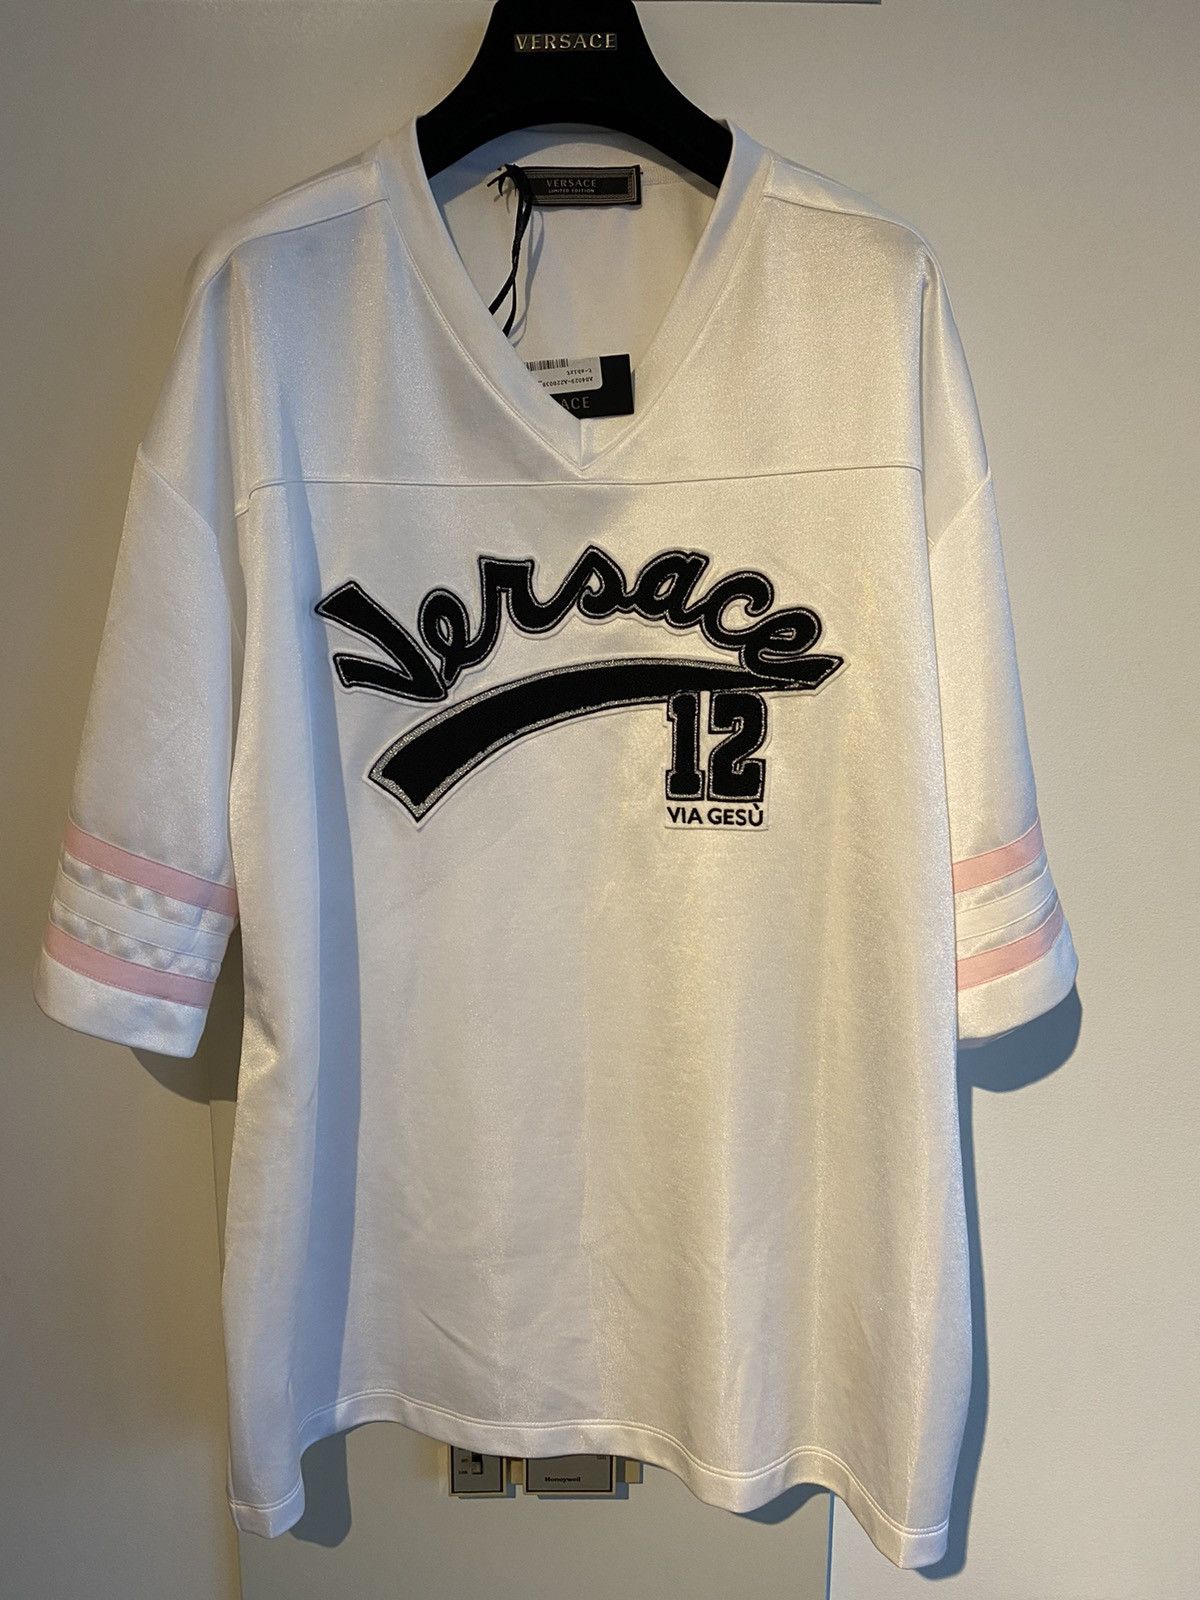 Versace Limited Edition Via Gesu Runway Jersey T-shirt $1,050 New Size US L / EU 52-54 / 3 - 4 Thumbnail